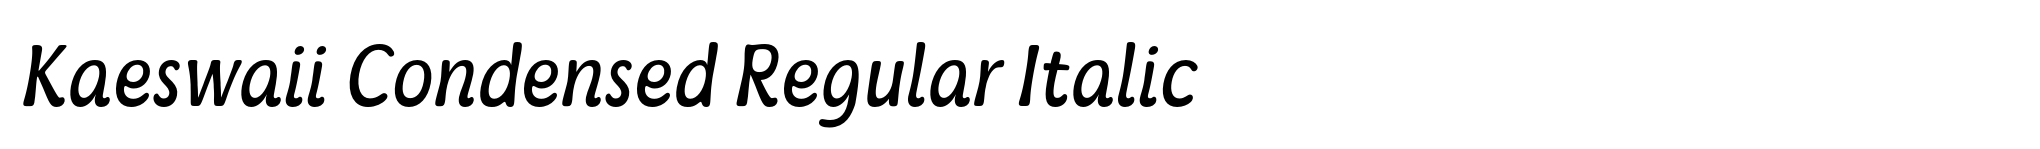 Kaeswaii Condensed Regular Italic image